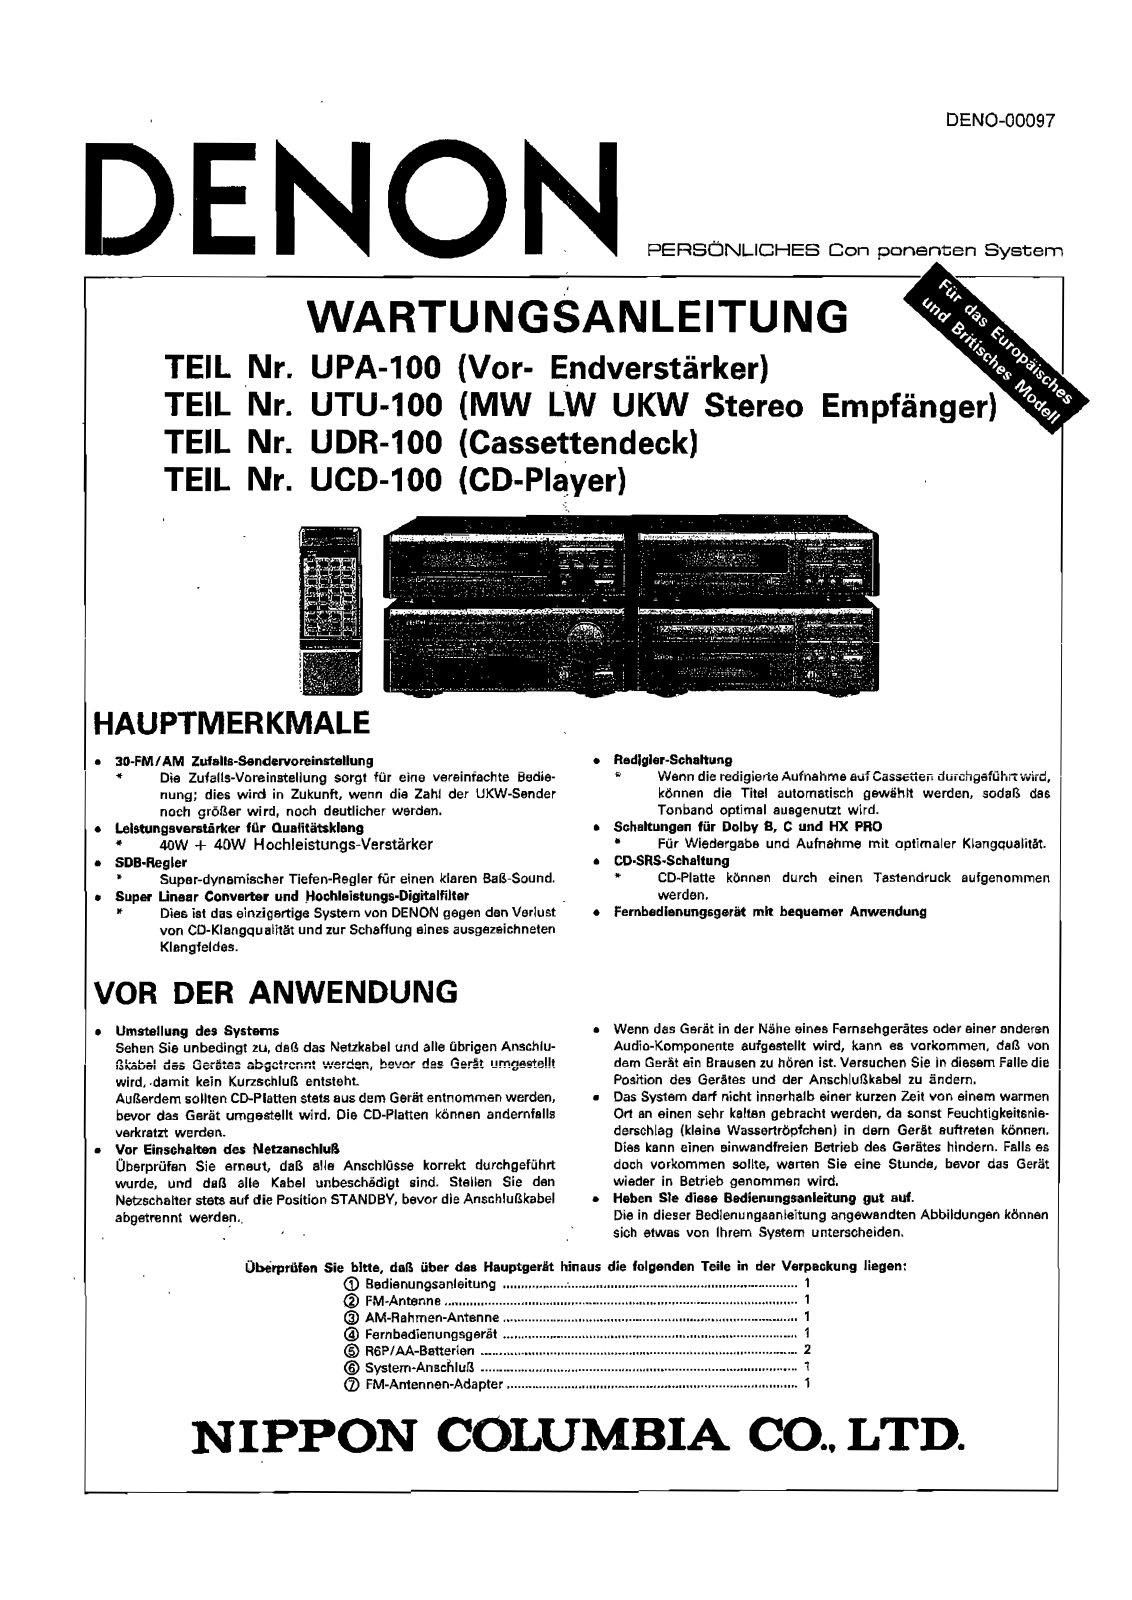 Denon UTU-100, UCD-100, UDR-100 Service Manual